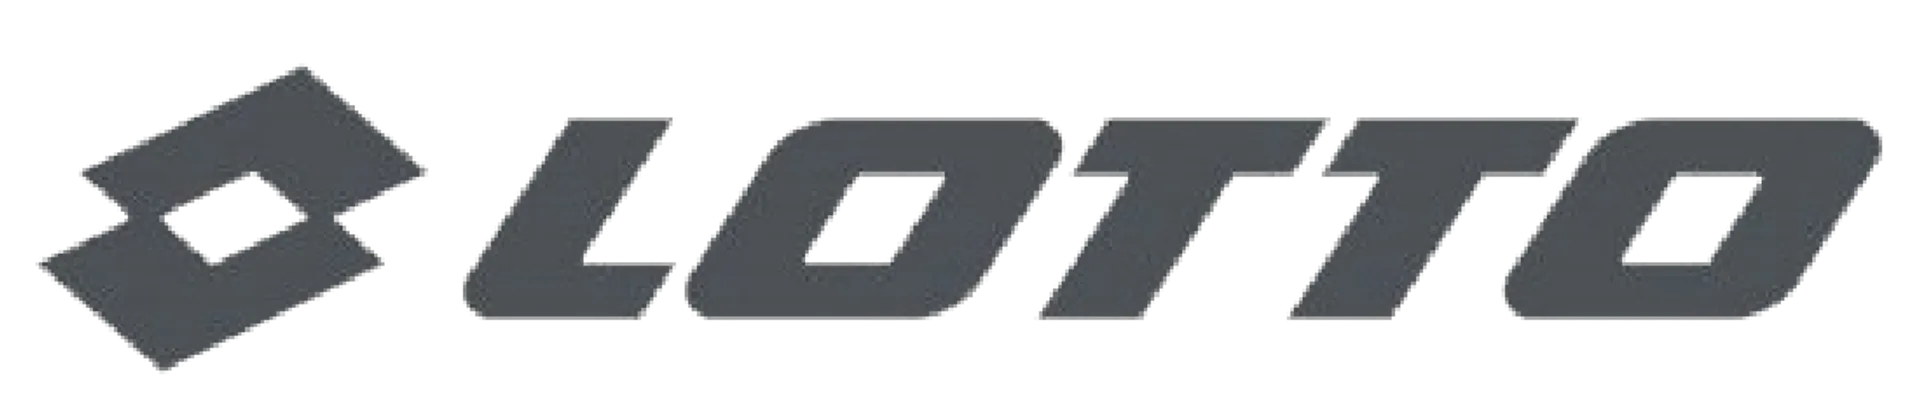 LOTTO logo. Current catalogue